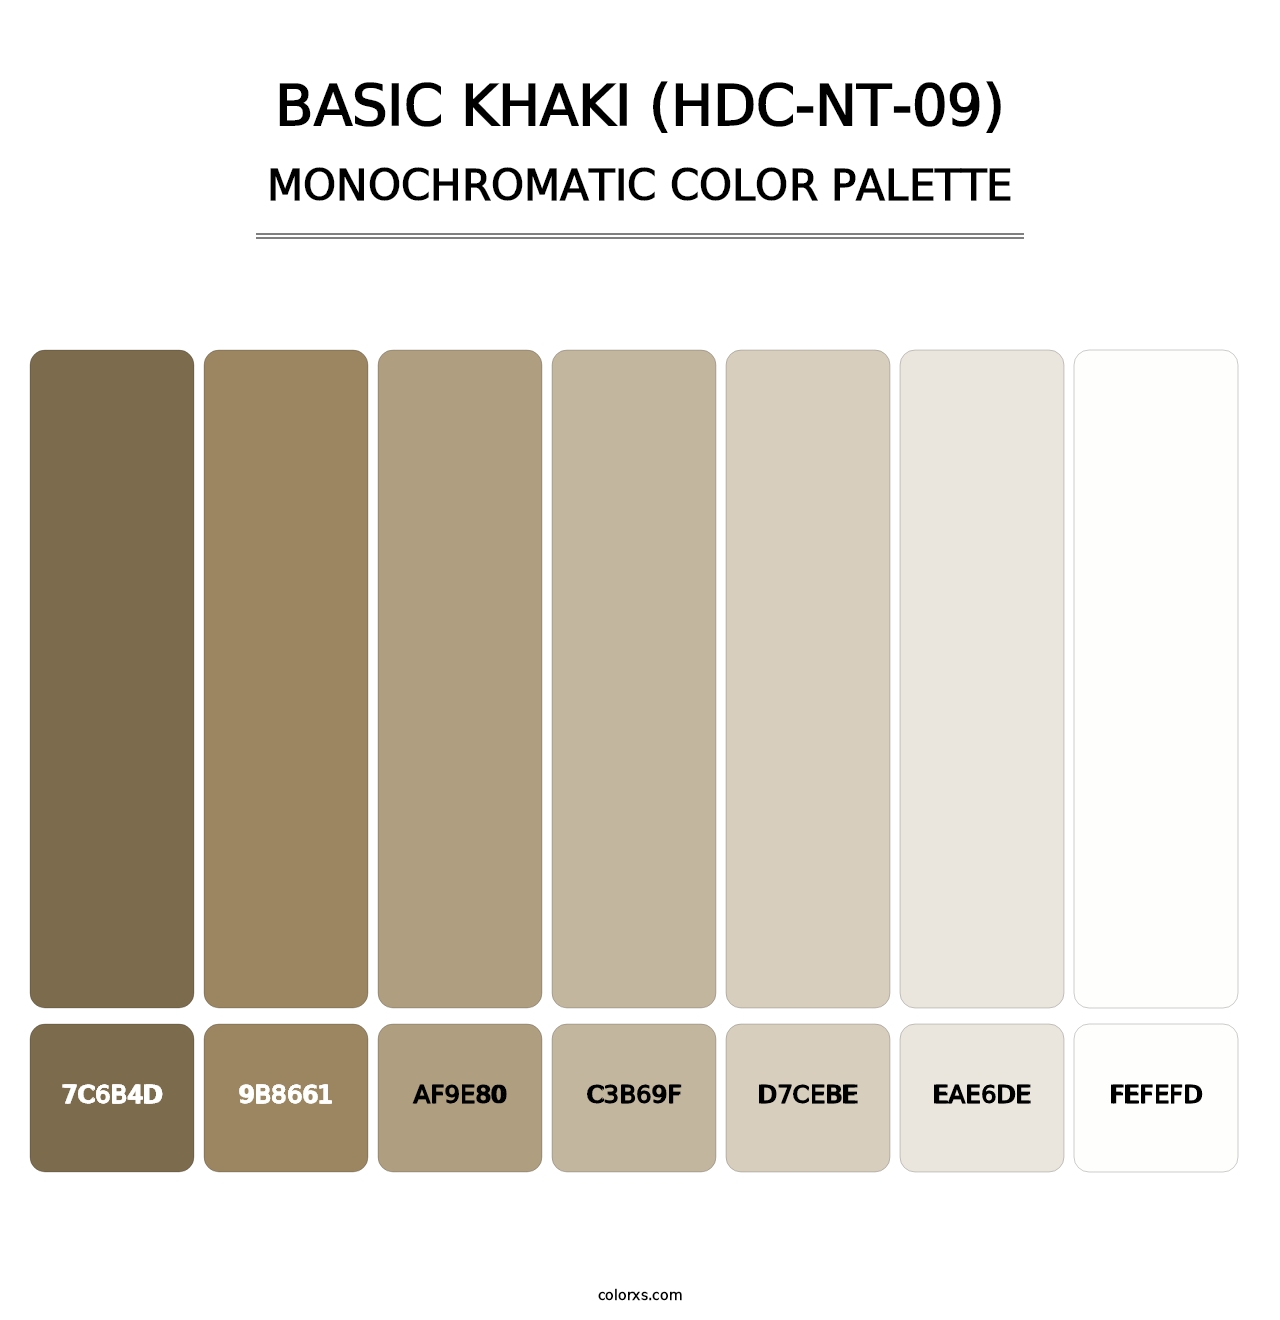 Basic Khaki (HDC-NT-09) - Monochromatic Color Palette